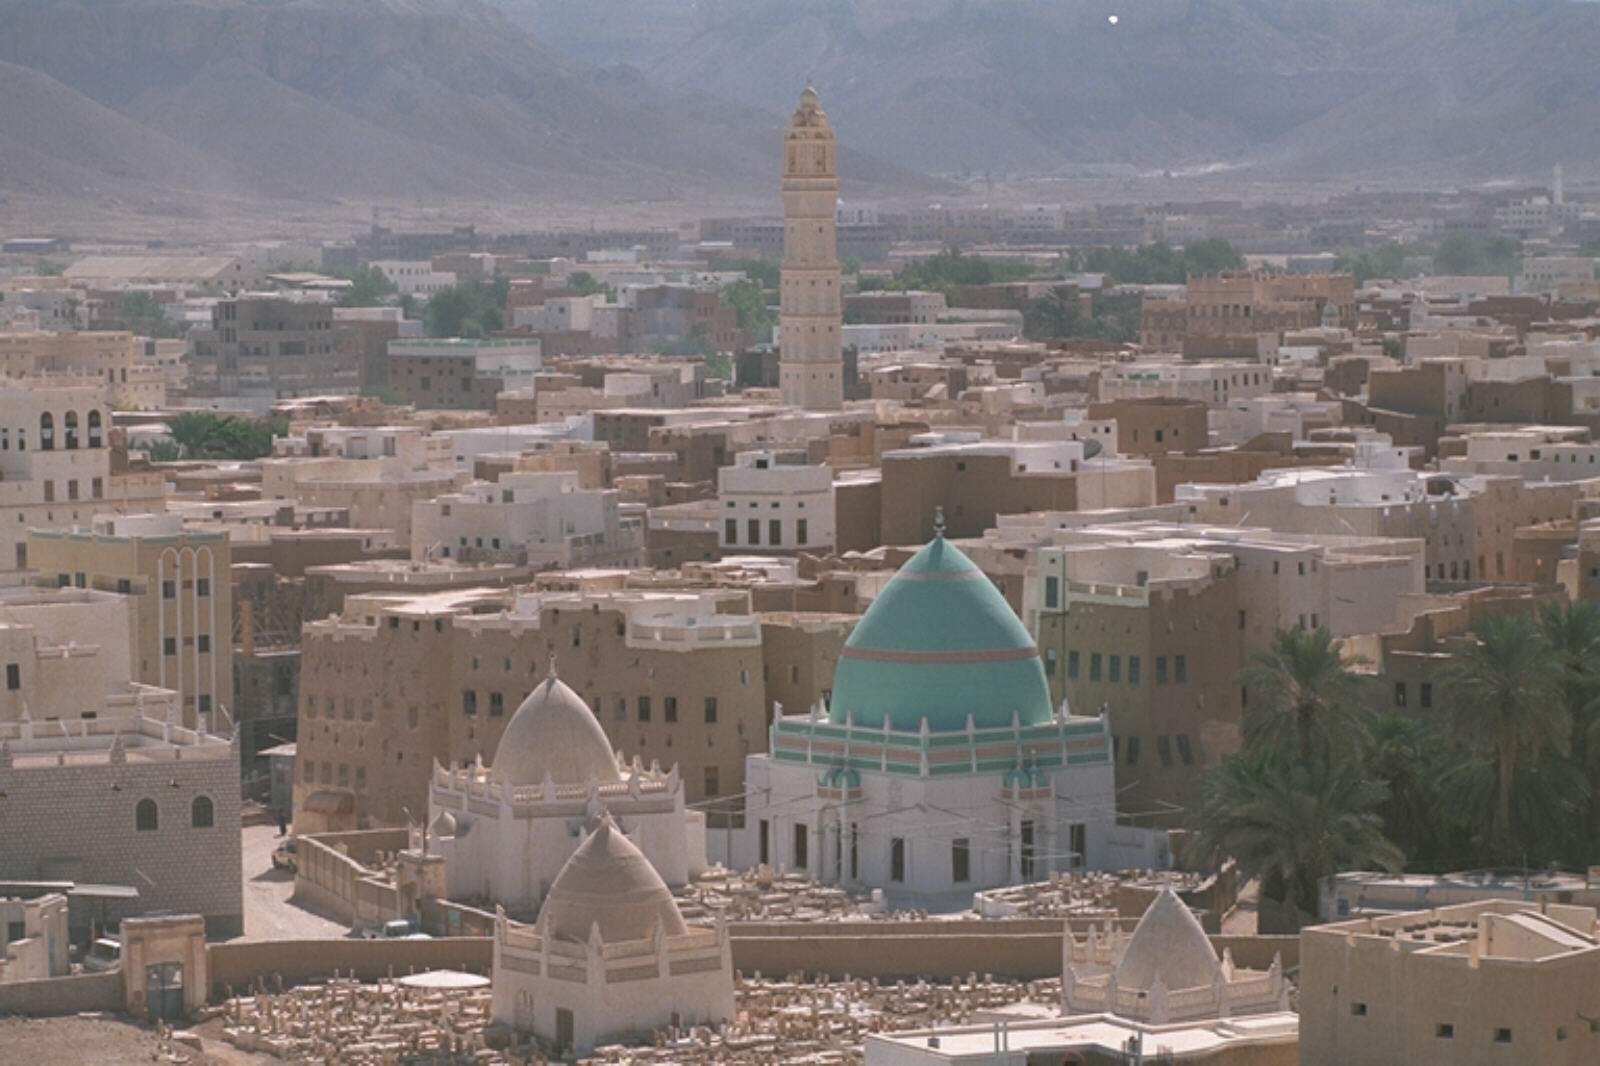 City of Sayoun, Wadi Hadramout, Yemen